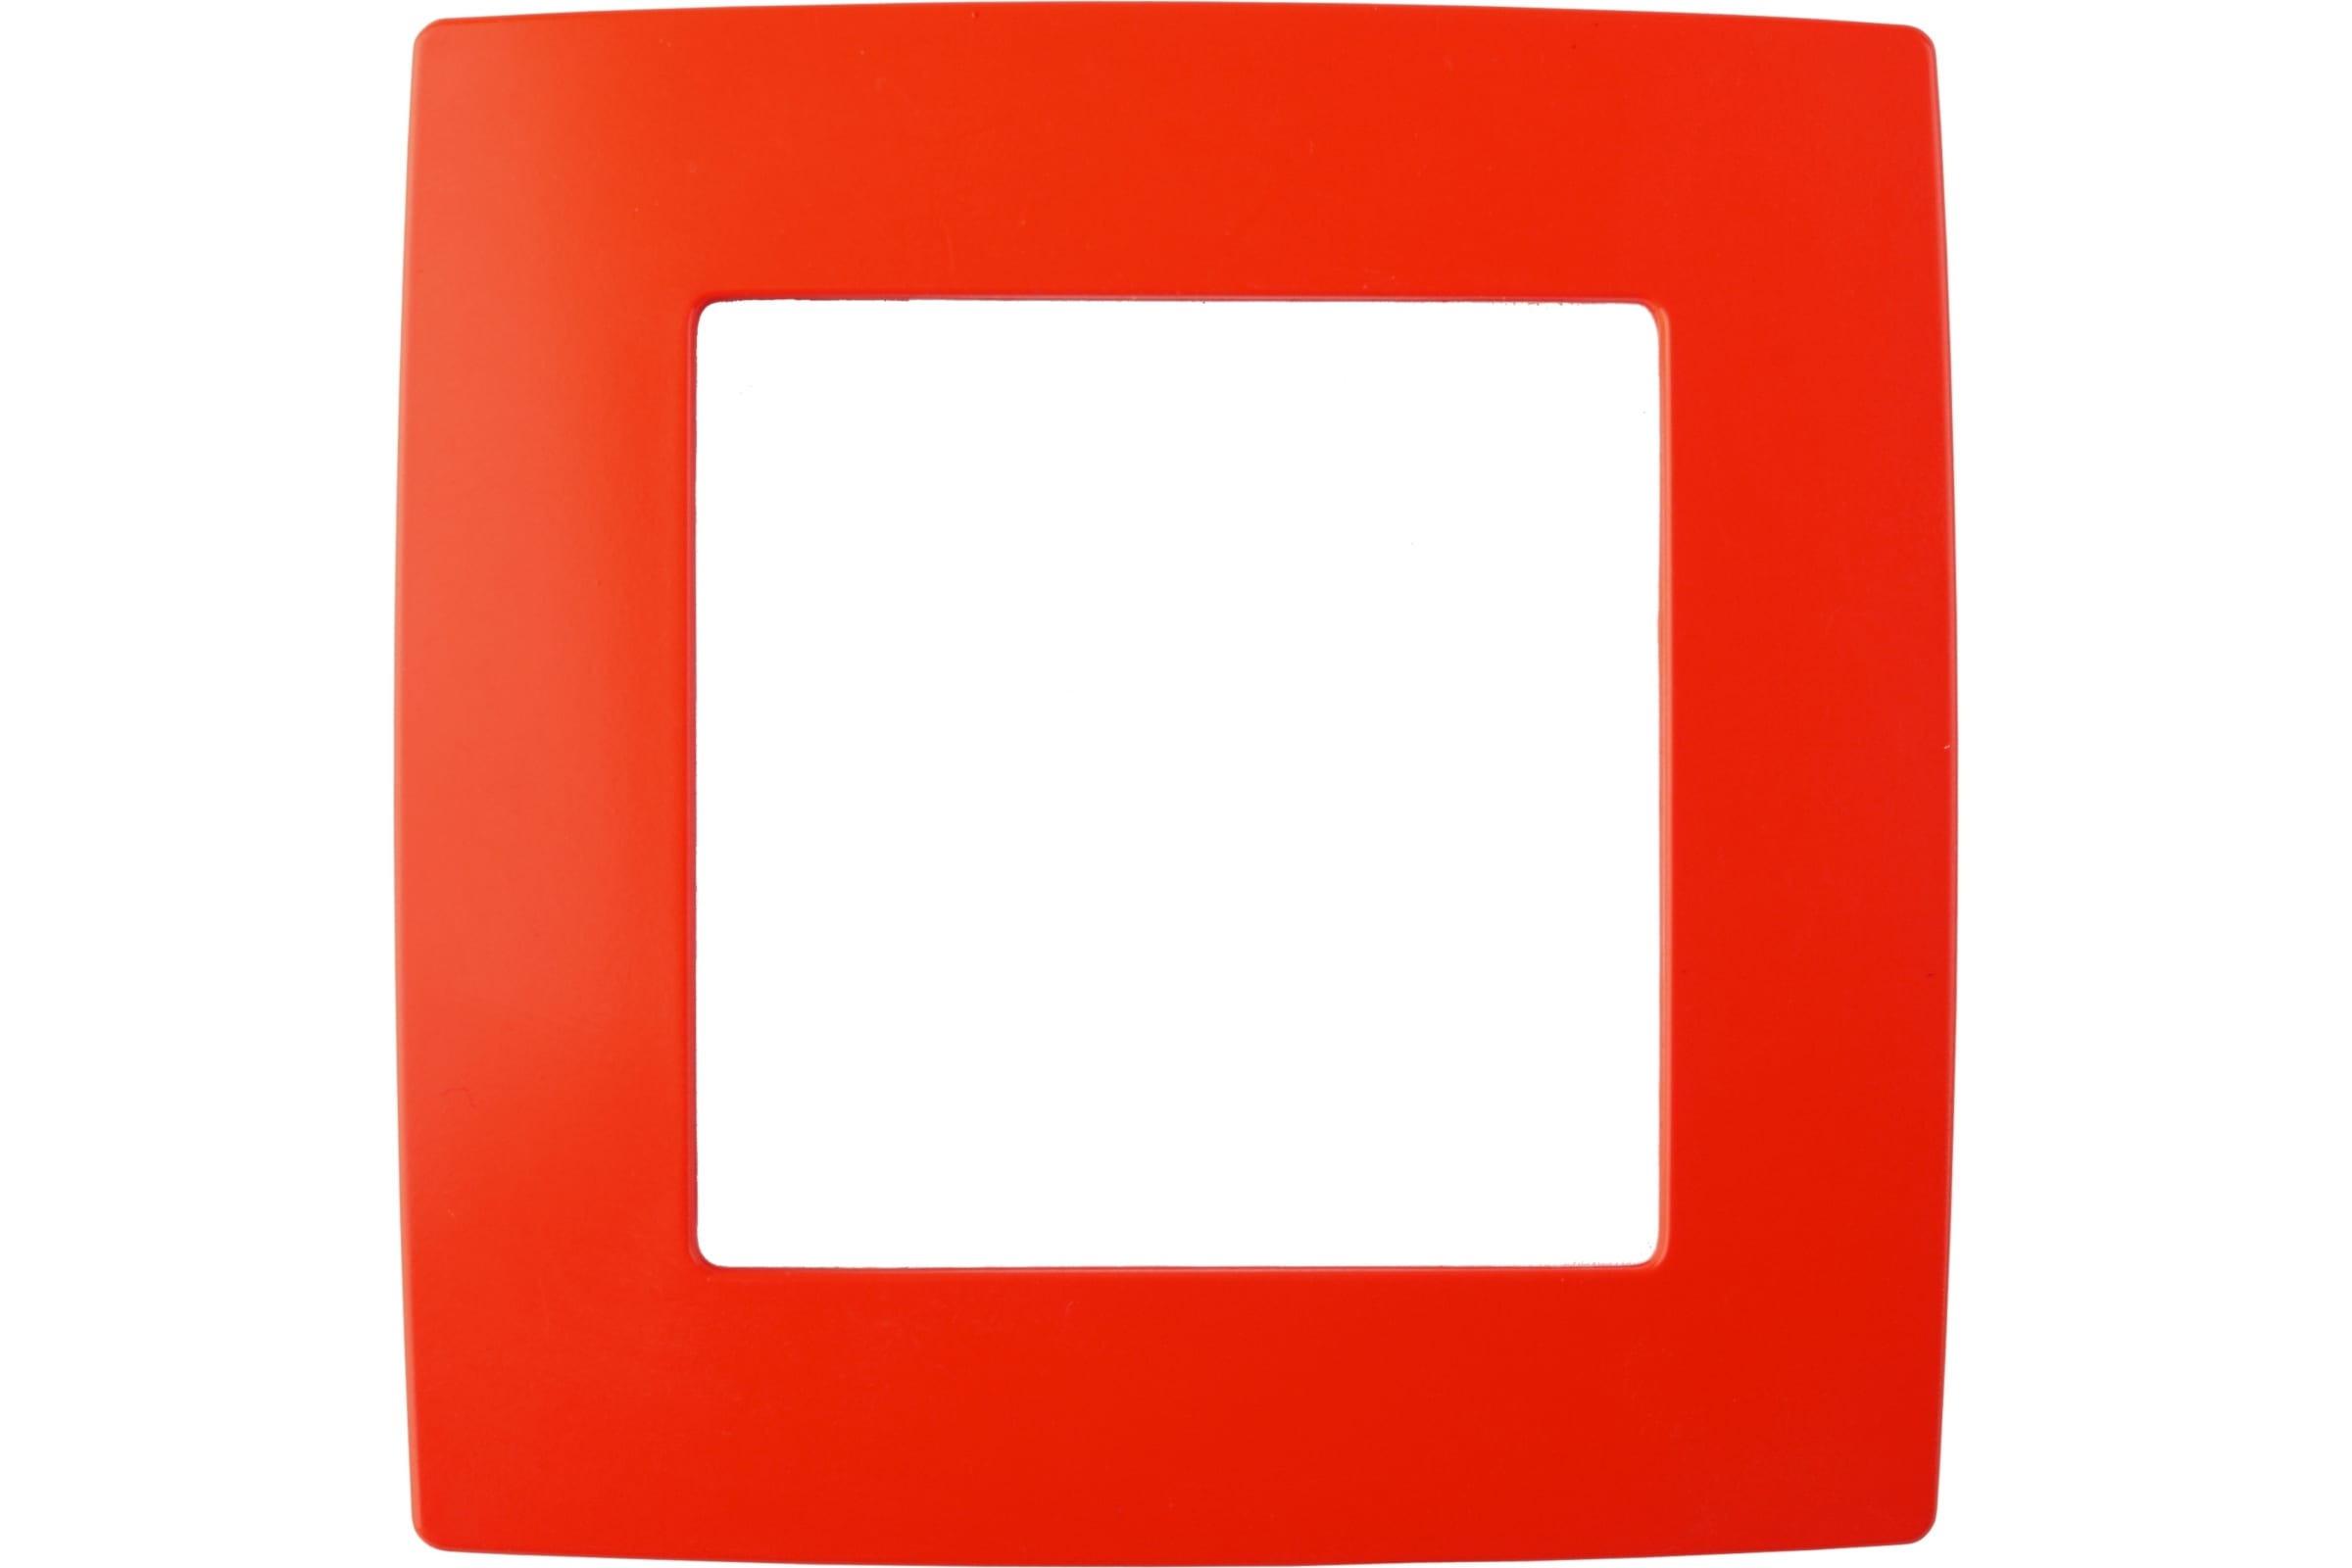 ЭРА 12-5001-23 Рамка на 1 пост, 12, красный Б0019388 рамка на 1 пост эра 12 5001 25 12 бордо б0019390